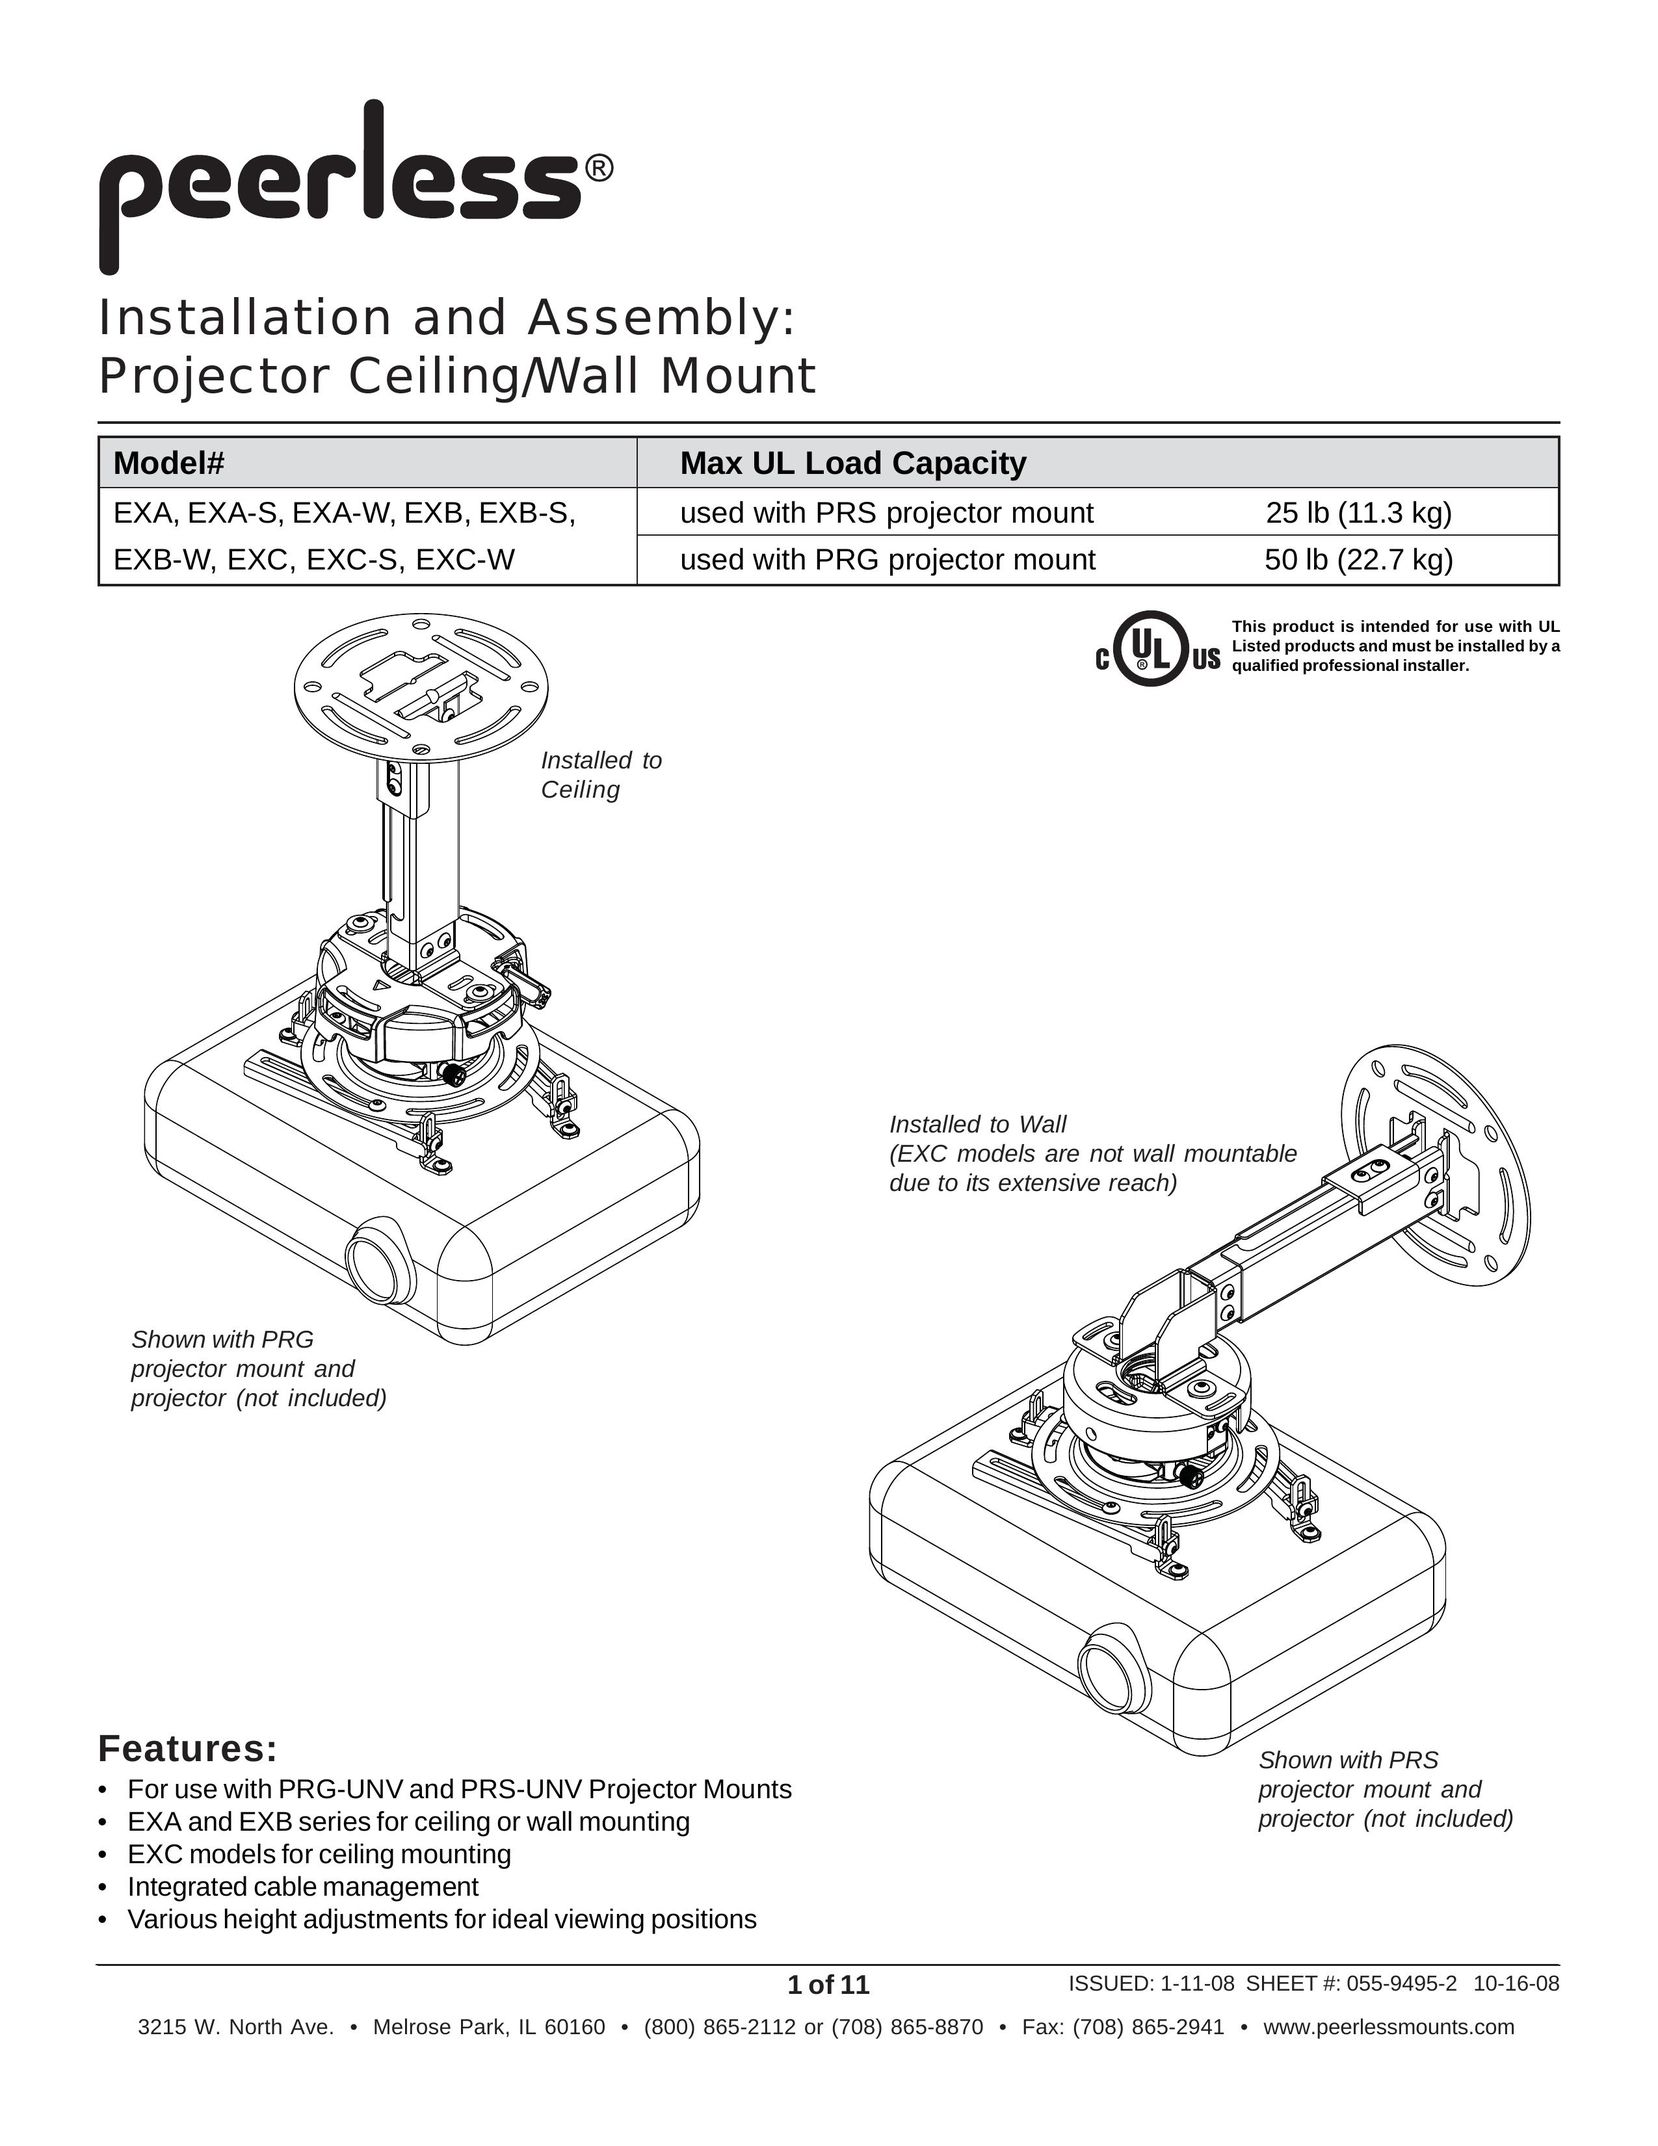 Peerless Industries EXB-S Projector User Manual